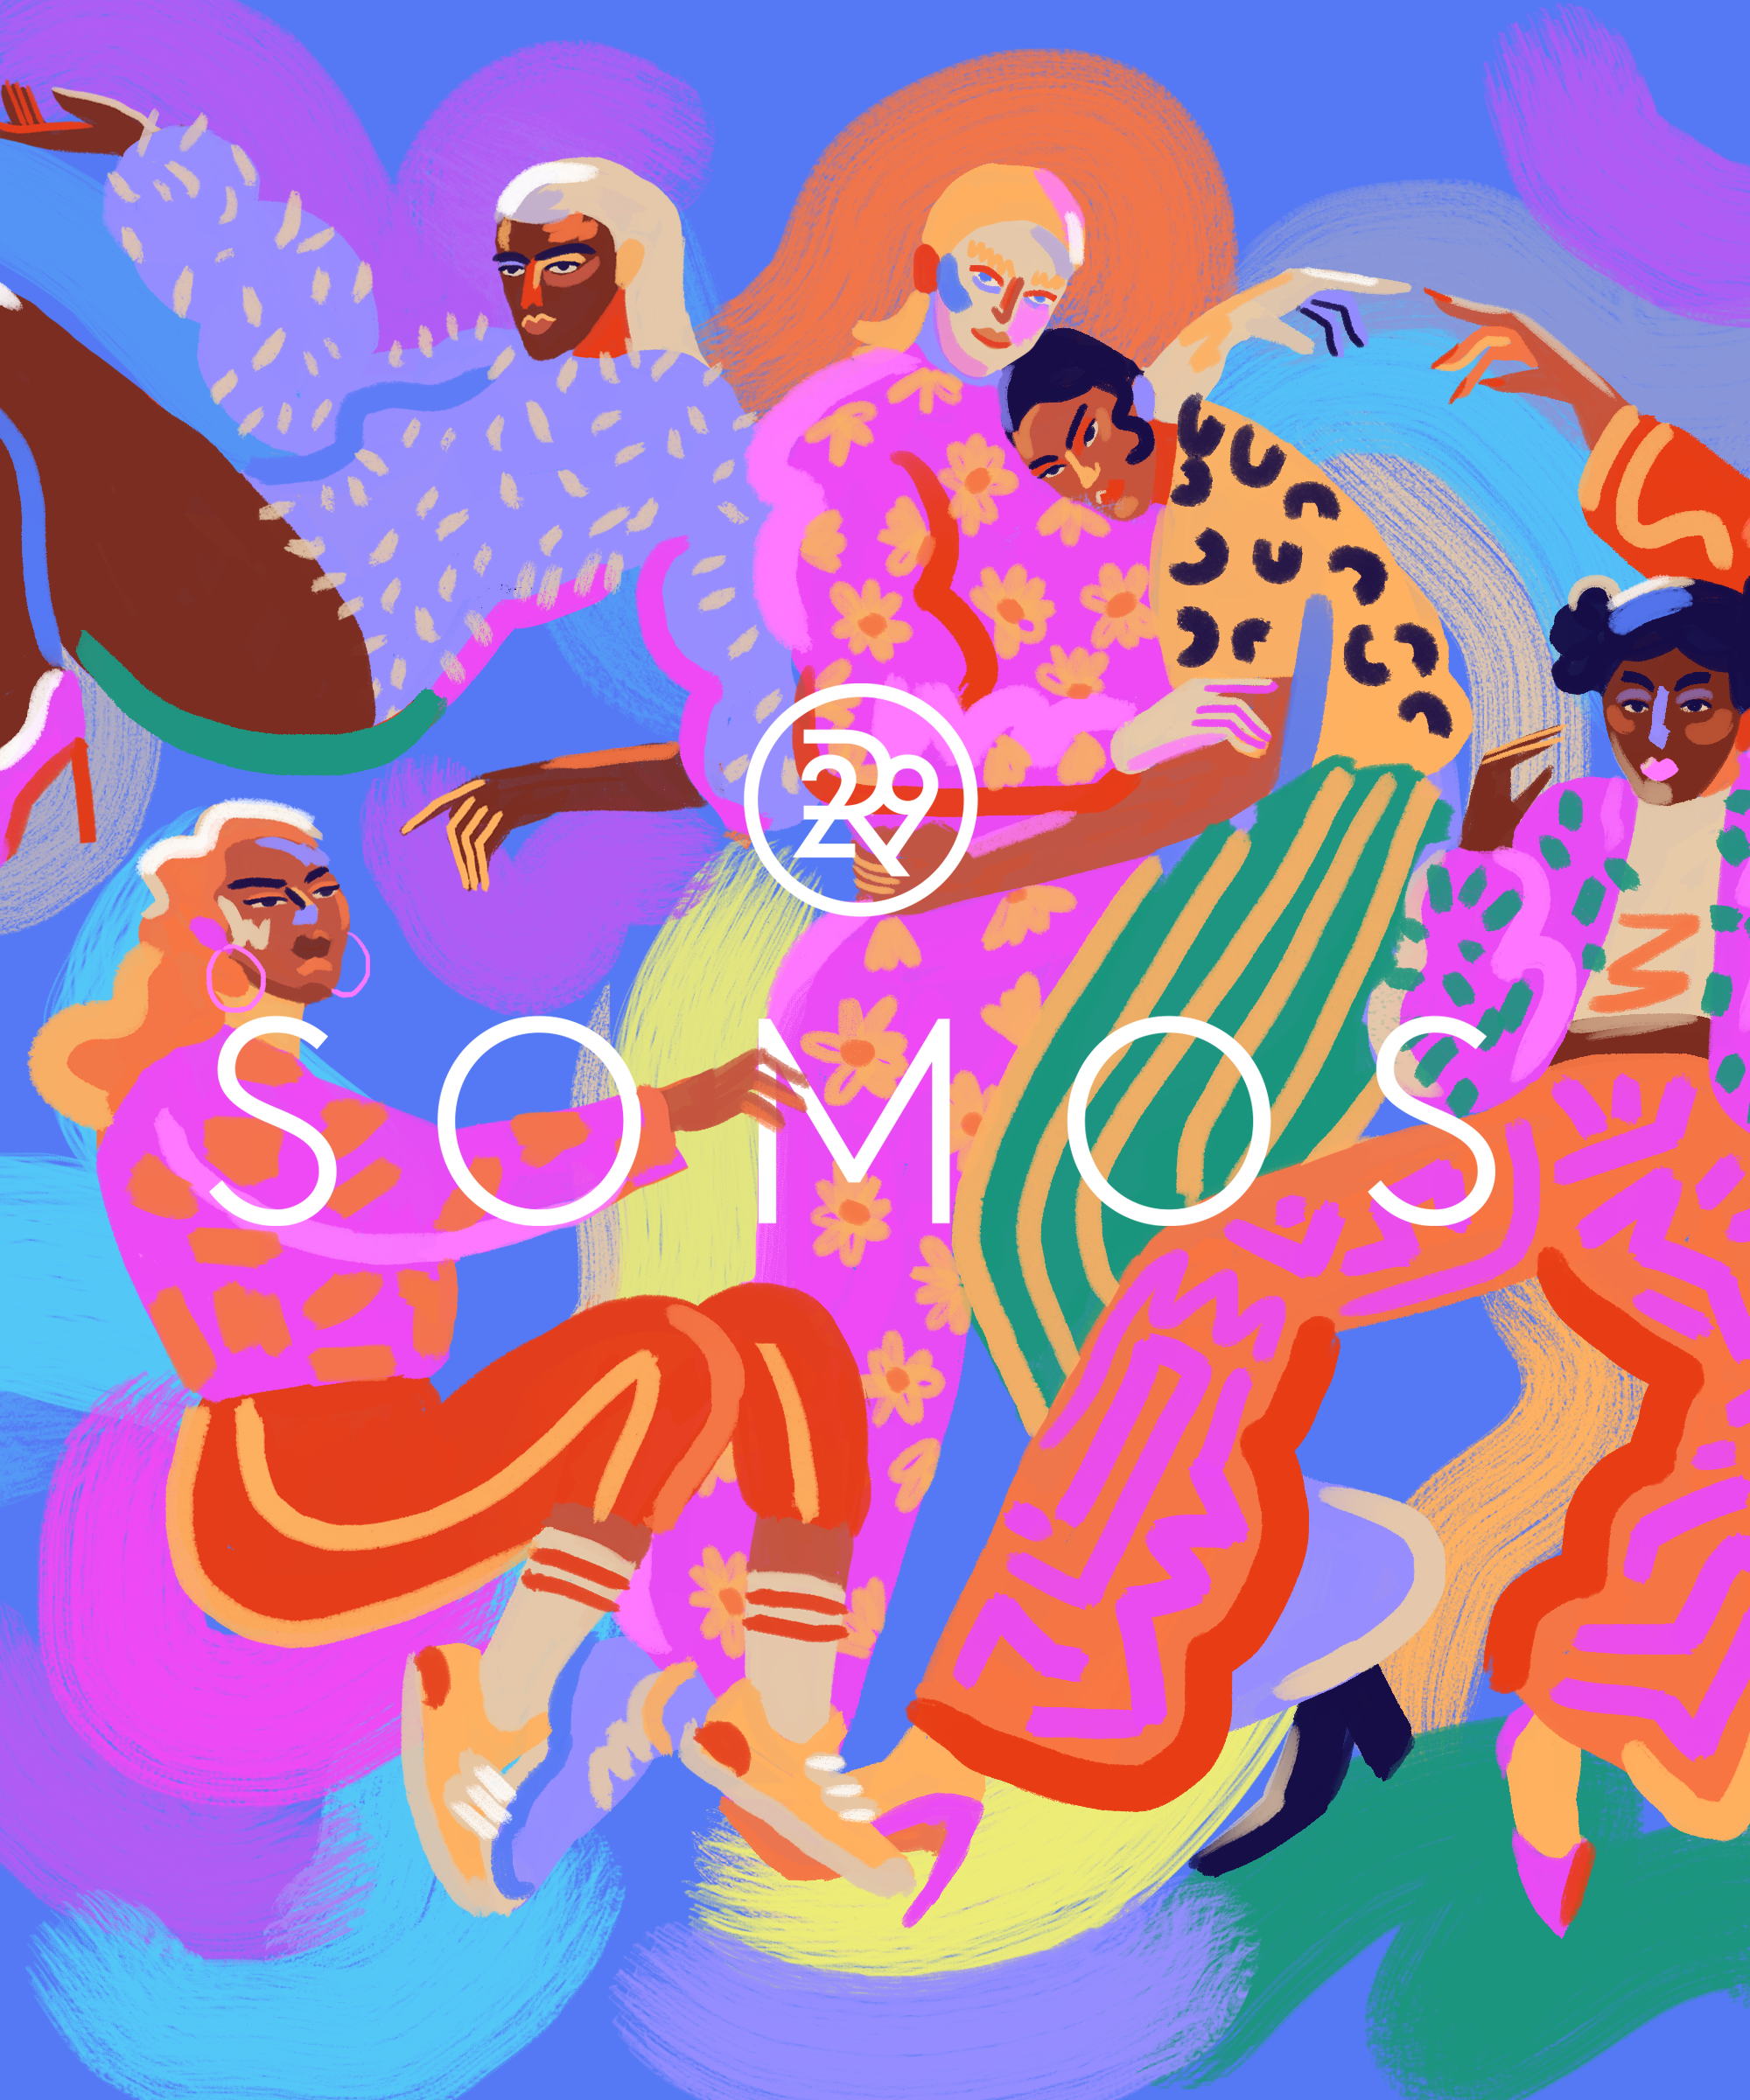 Instagram account for Somos